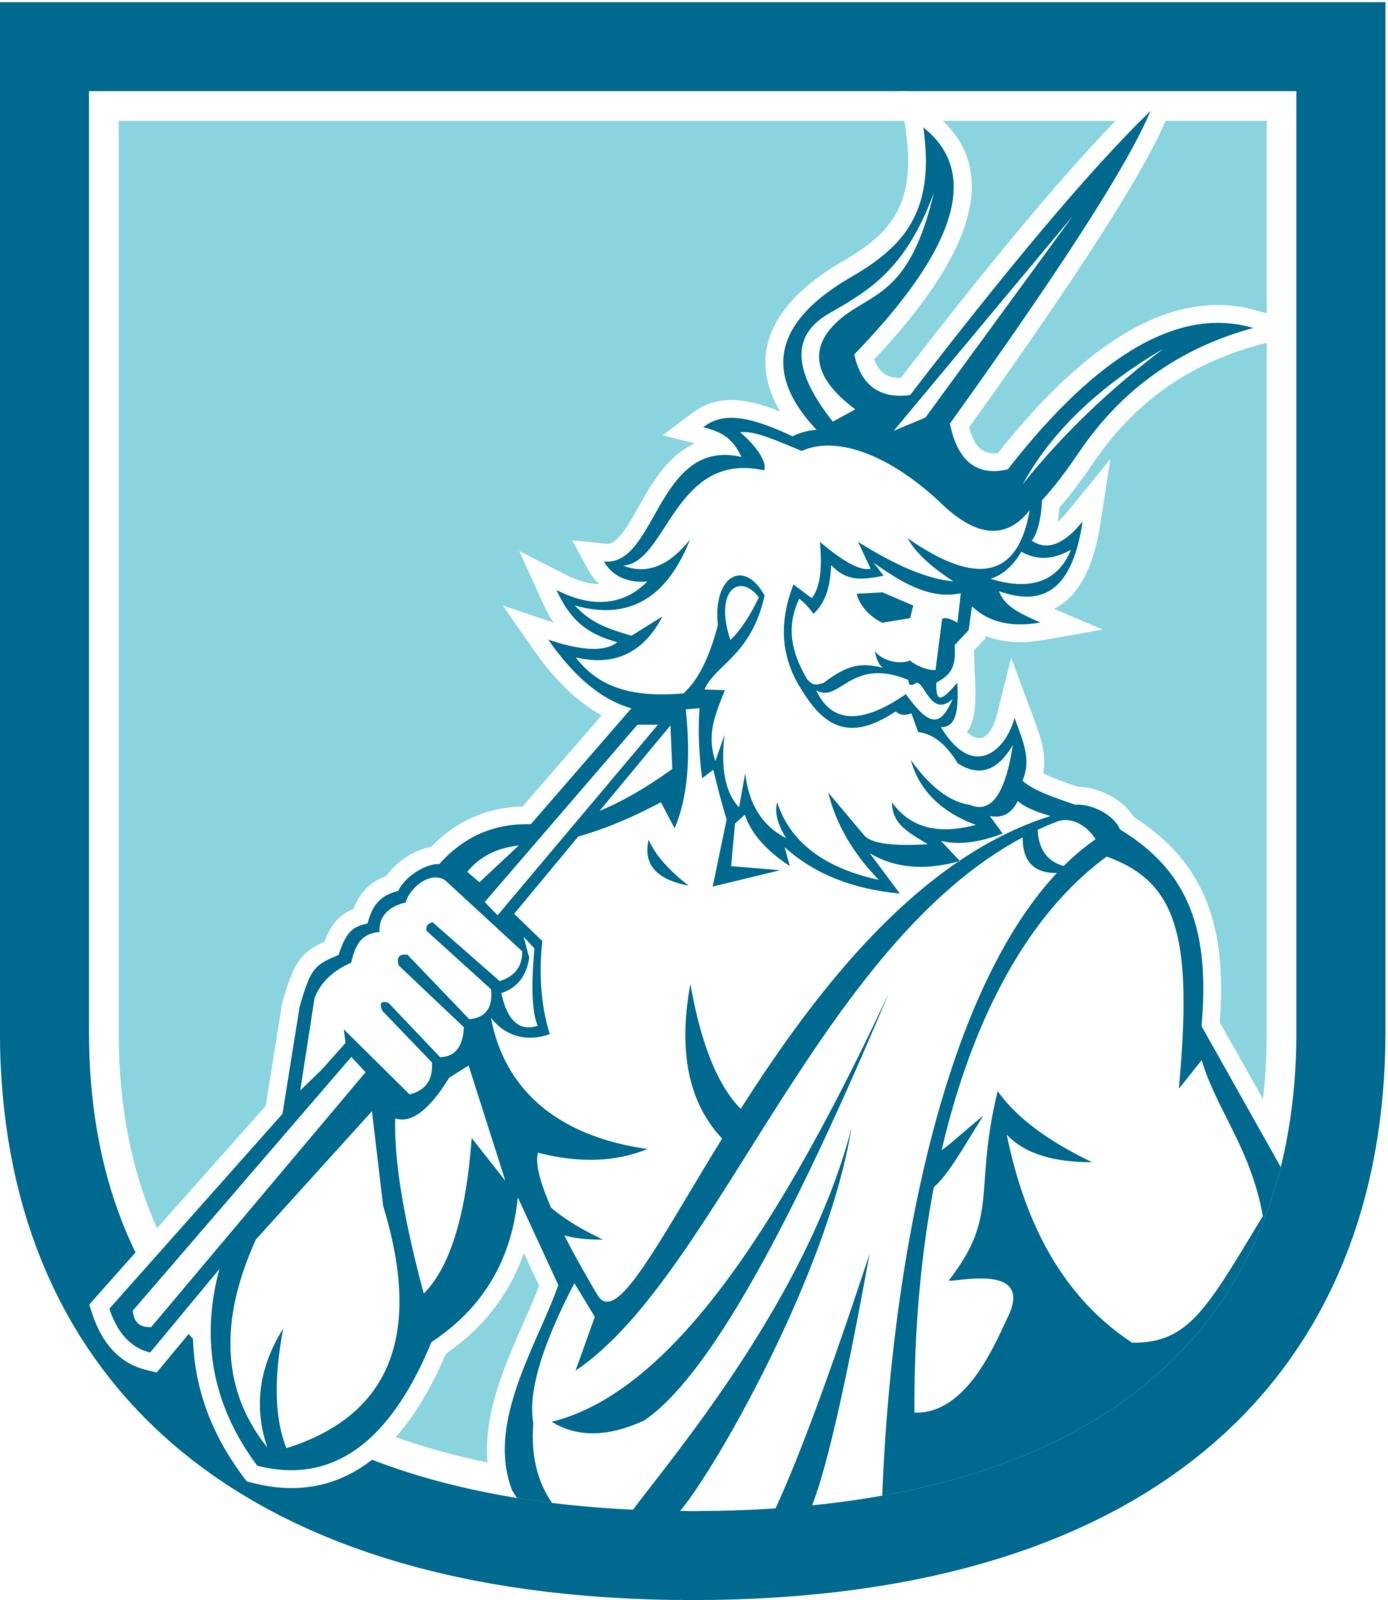 Illustration of Roman god of sea Neptune or Poseidon of Greek mythology holding a trident set inside shield crest on isolated background done in retro style